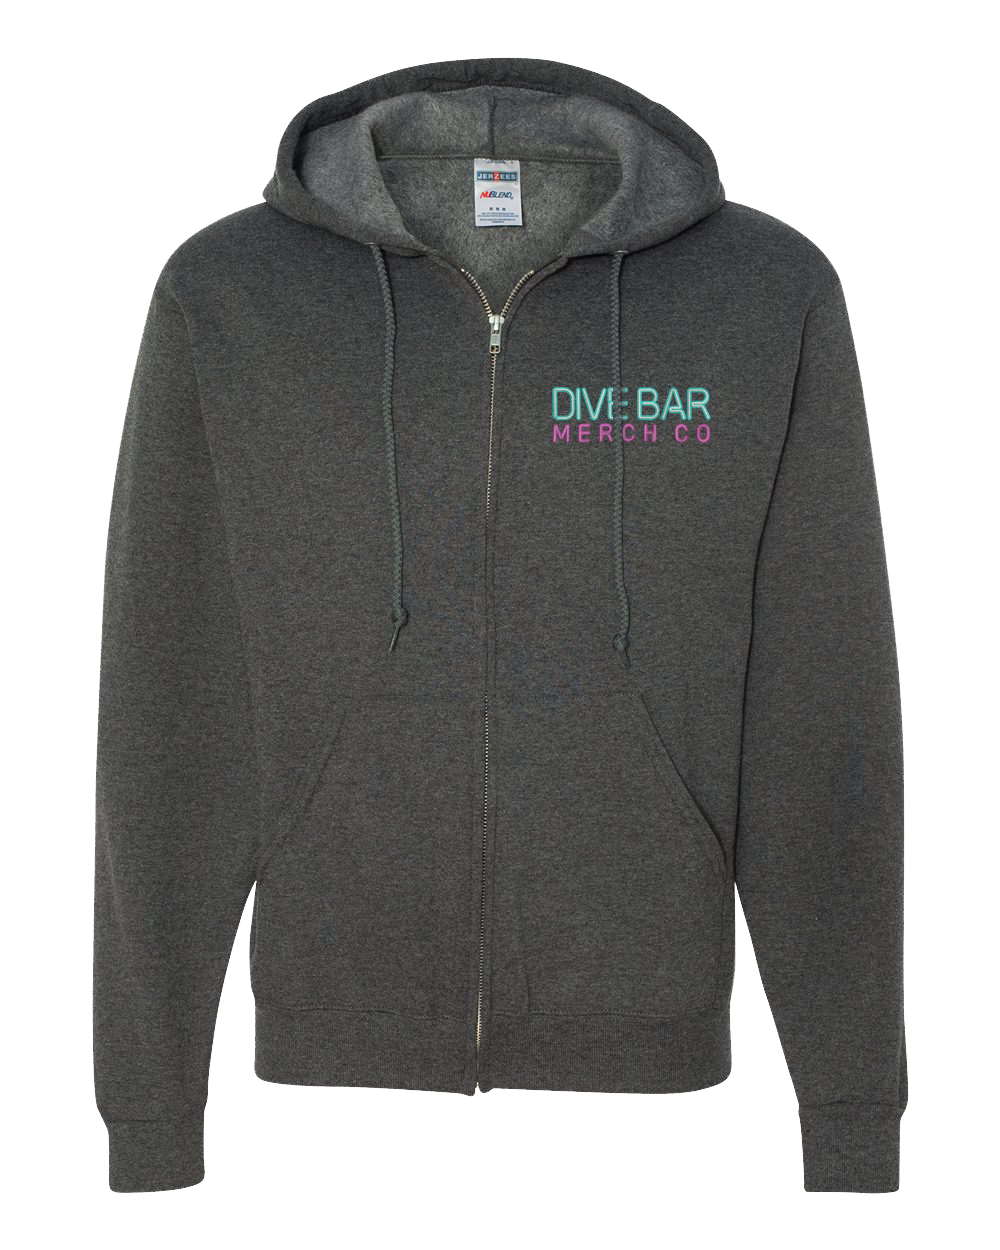 SHARK RIDER Zip-up hoodie – Dive Bar Nutrition